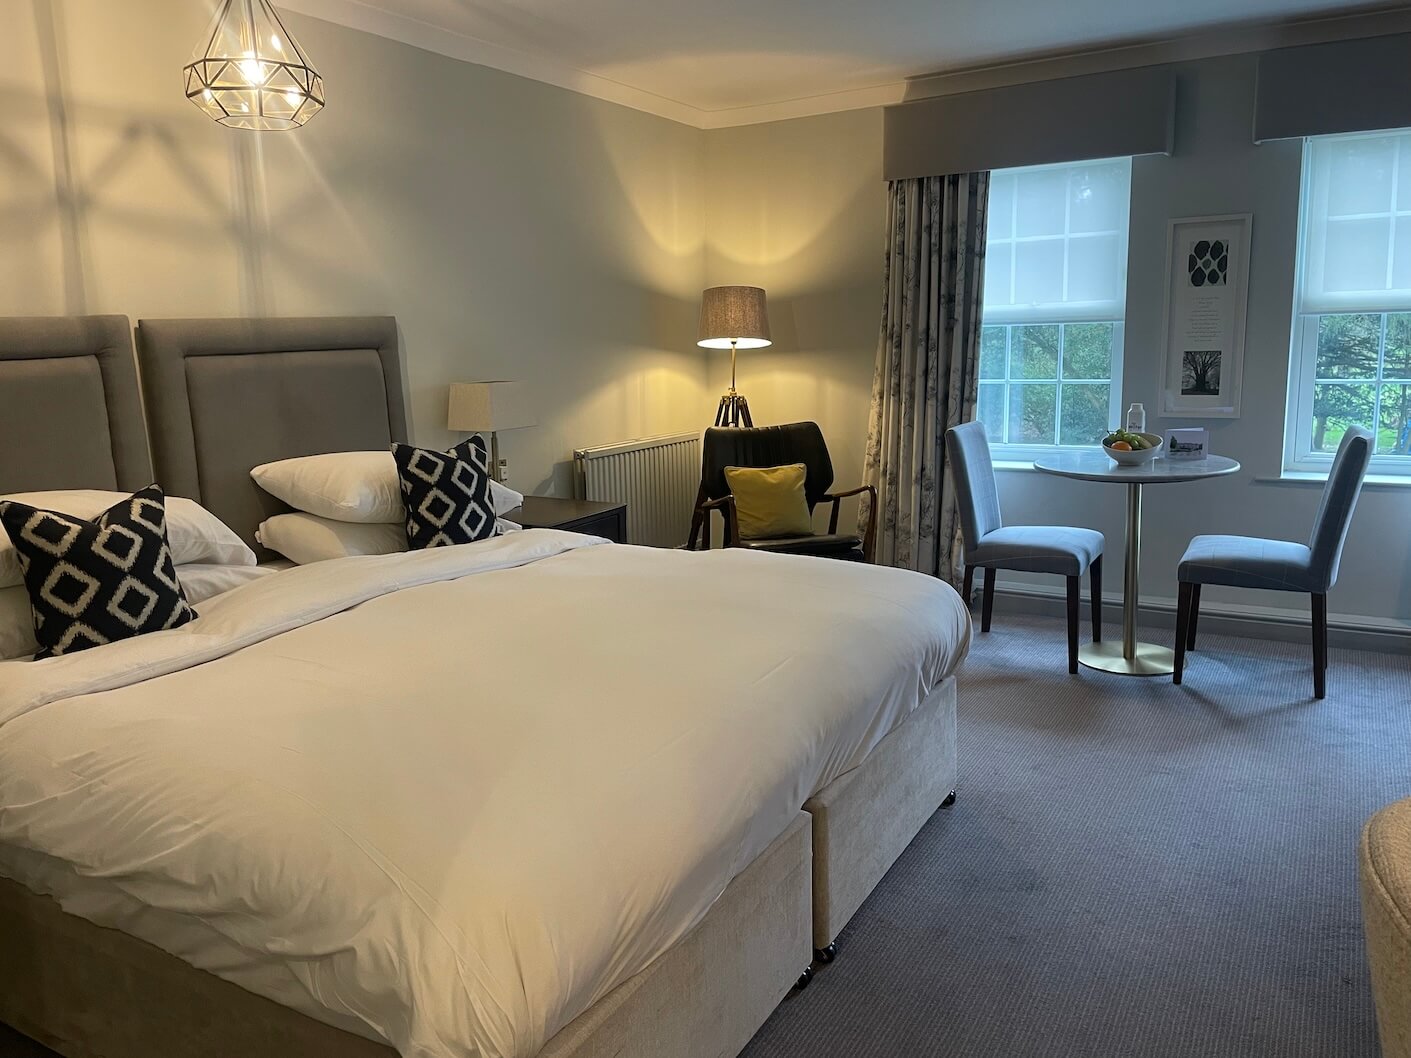 superior double bedroom at Burnham Beeches hotelsuperior double bedroom at Burnham Beeches hotel